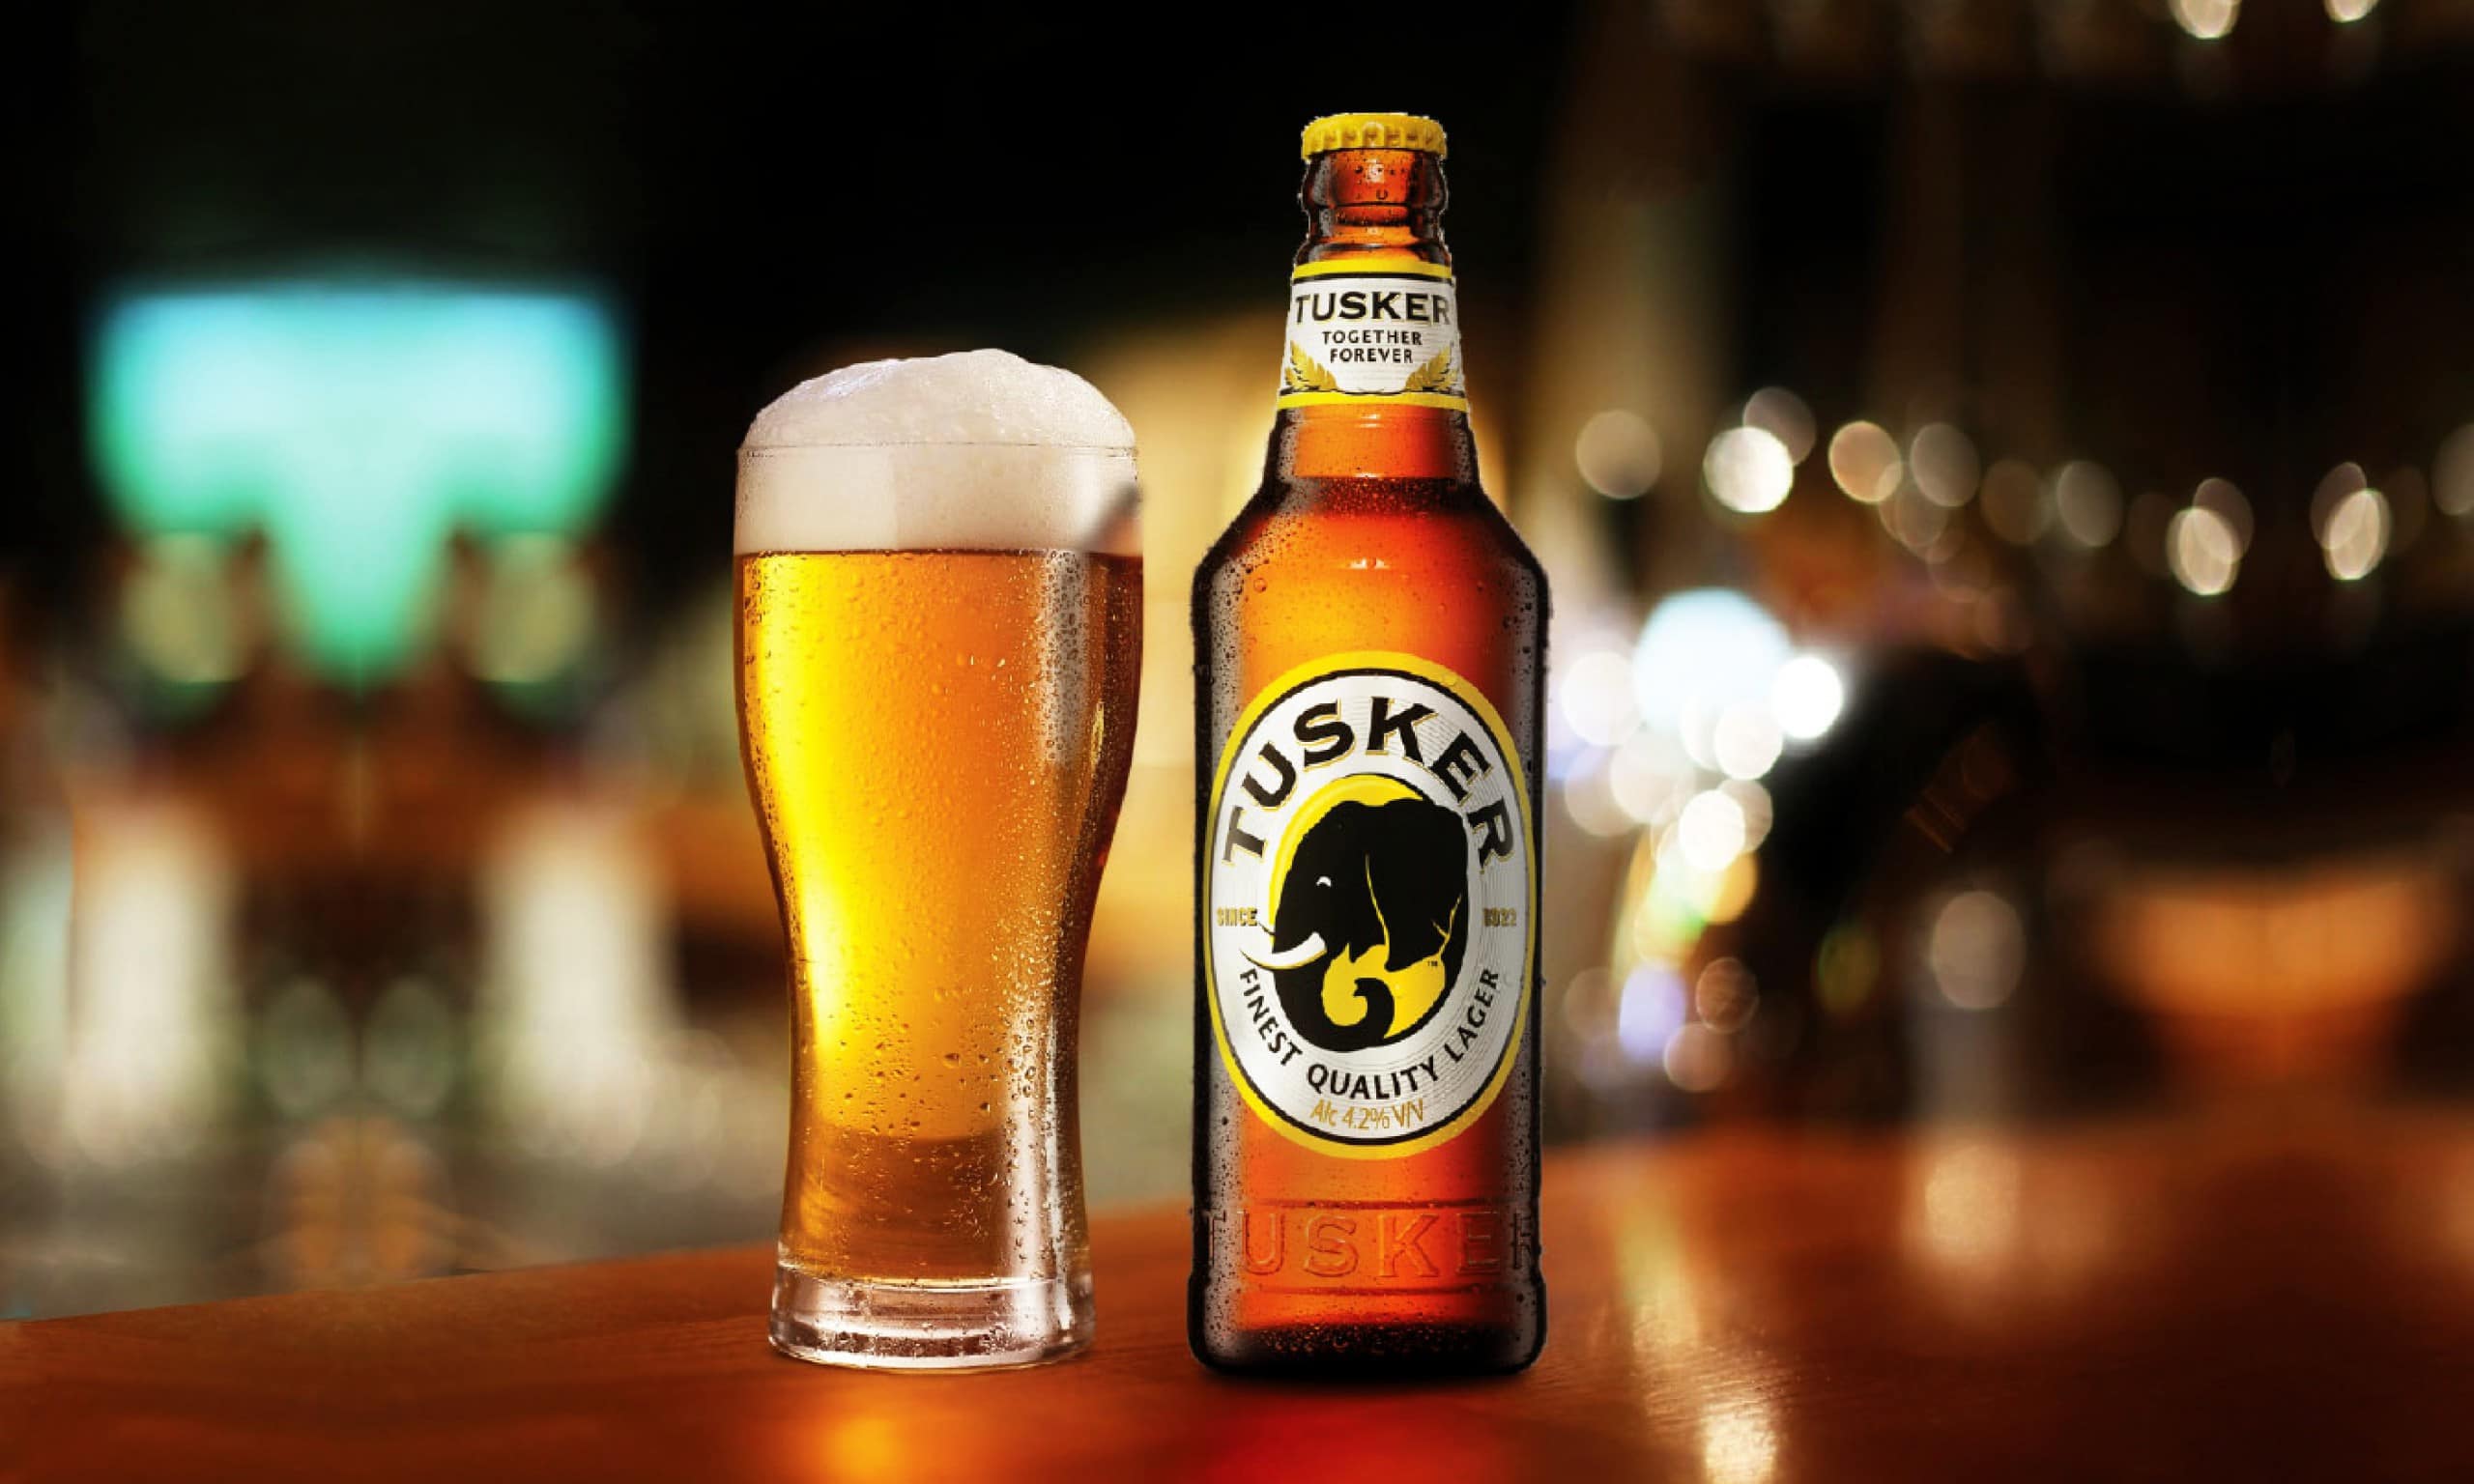 Tusker Beer a symbol of a nation's pride